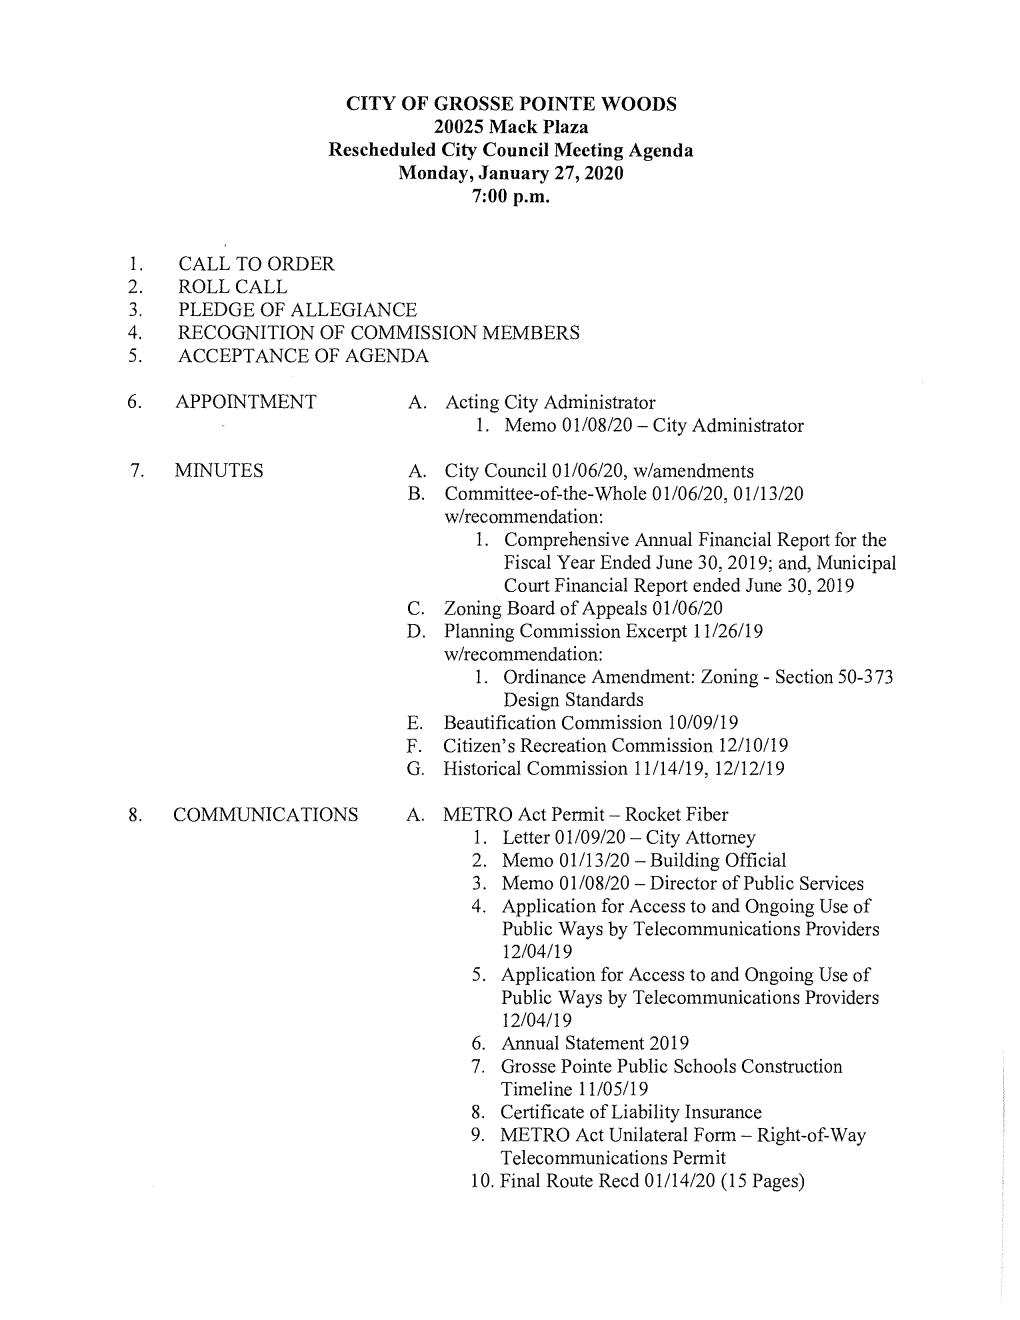 City Council Agenda Packet January 27, 2020